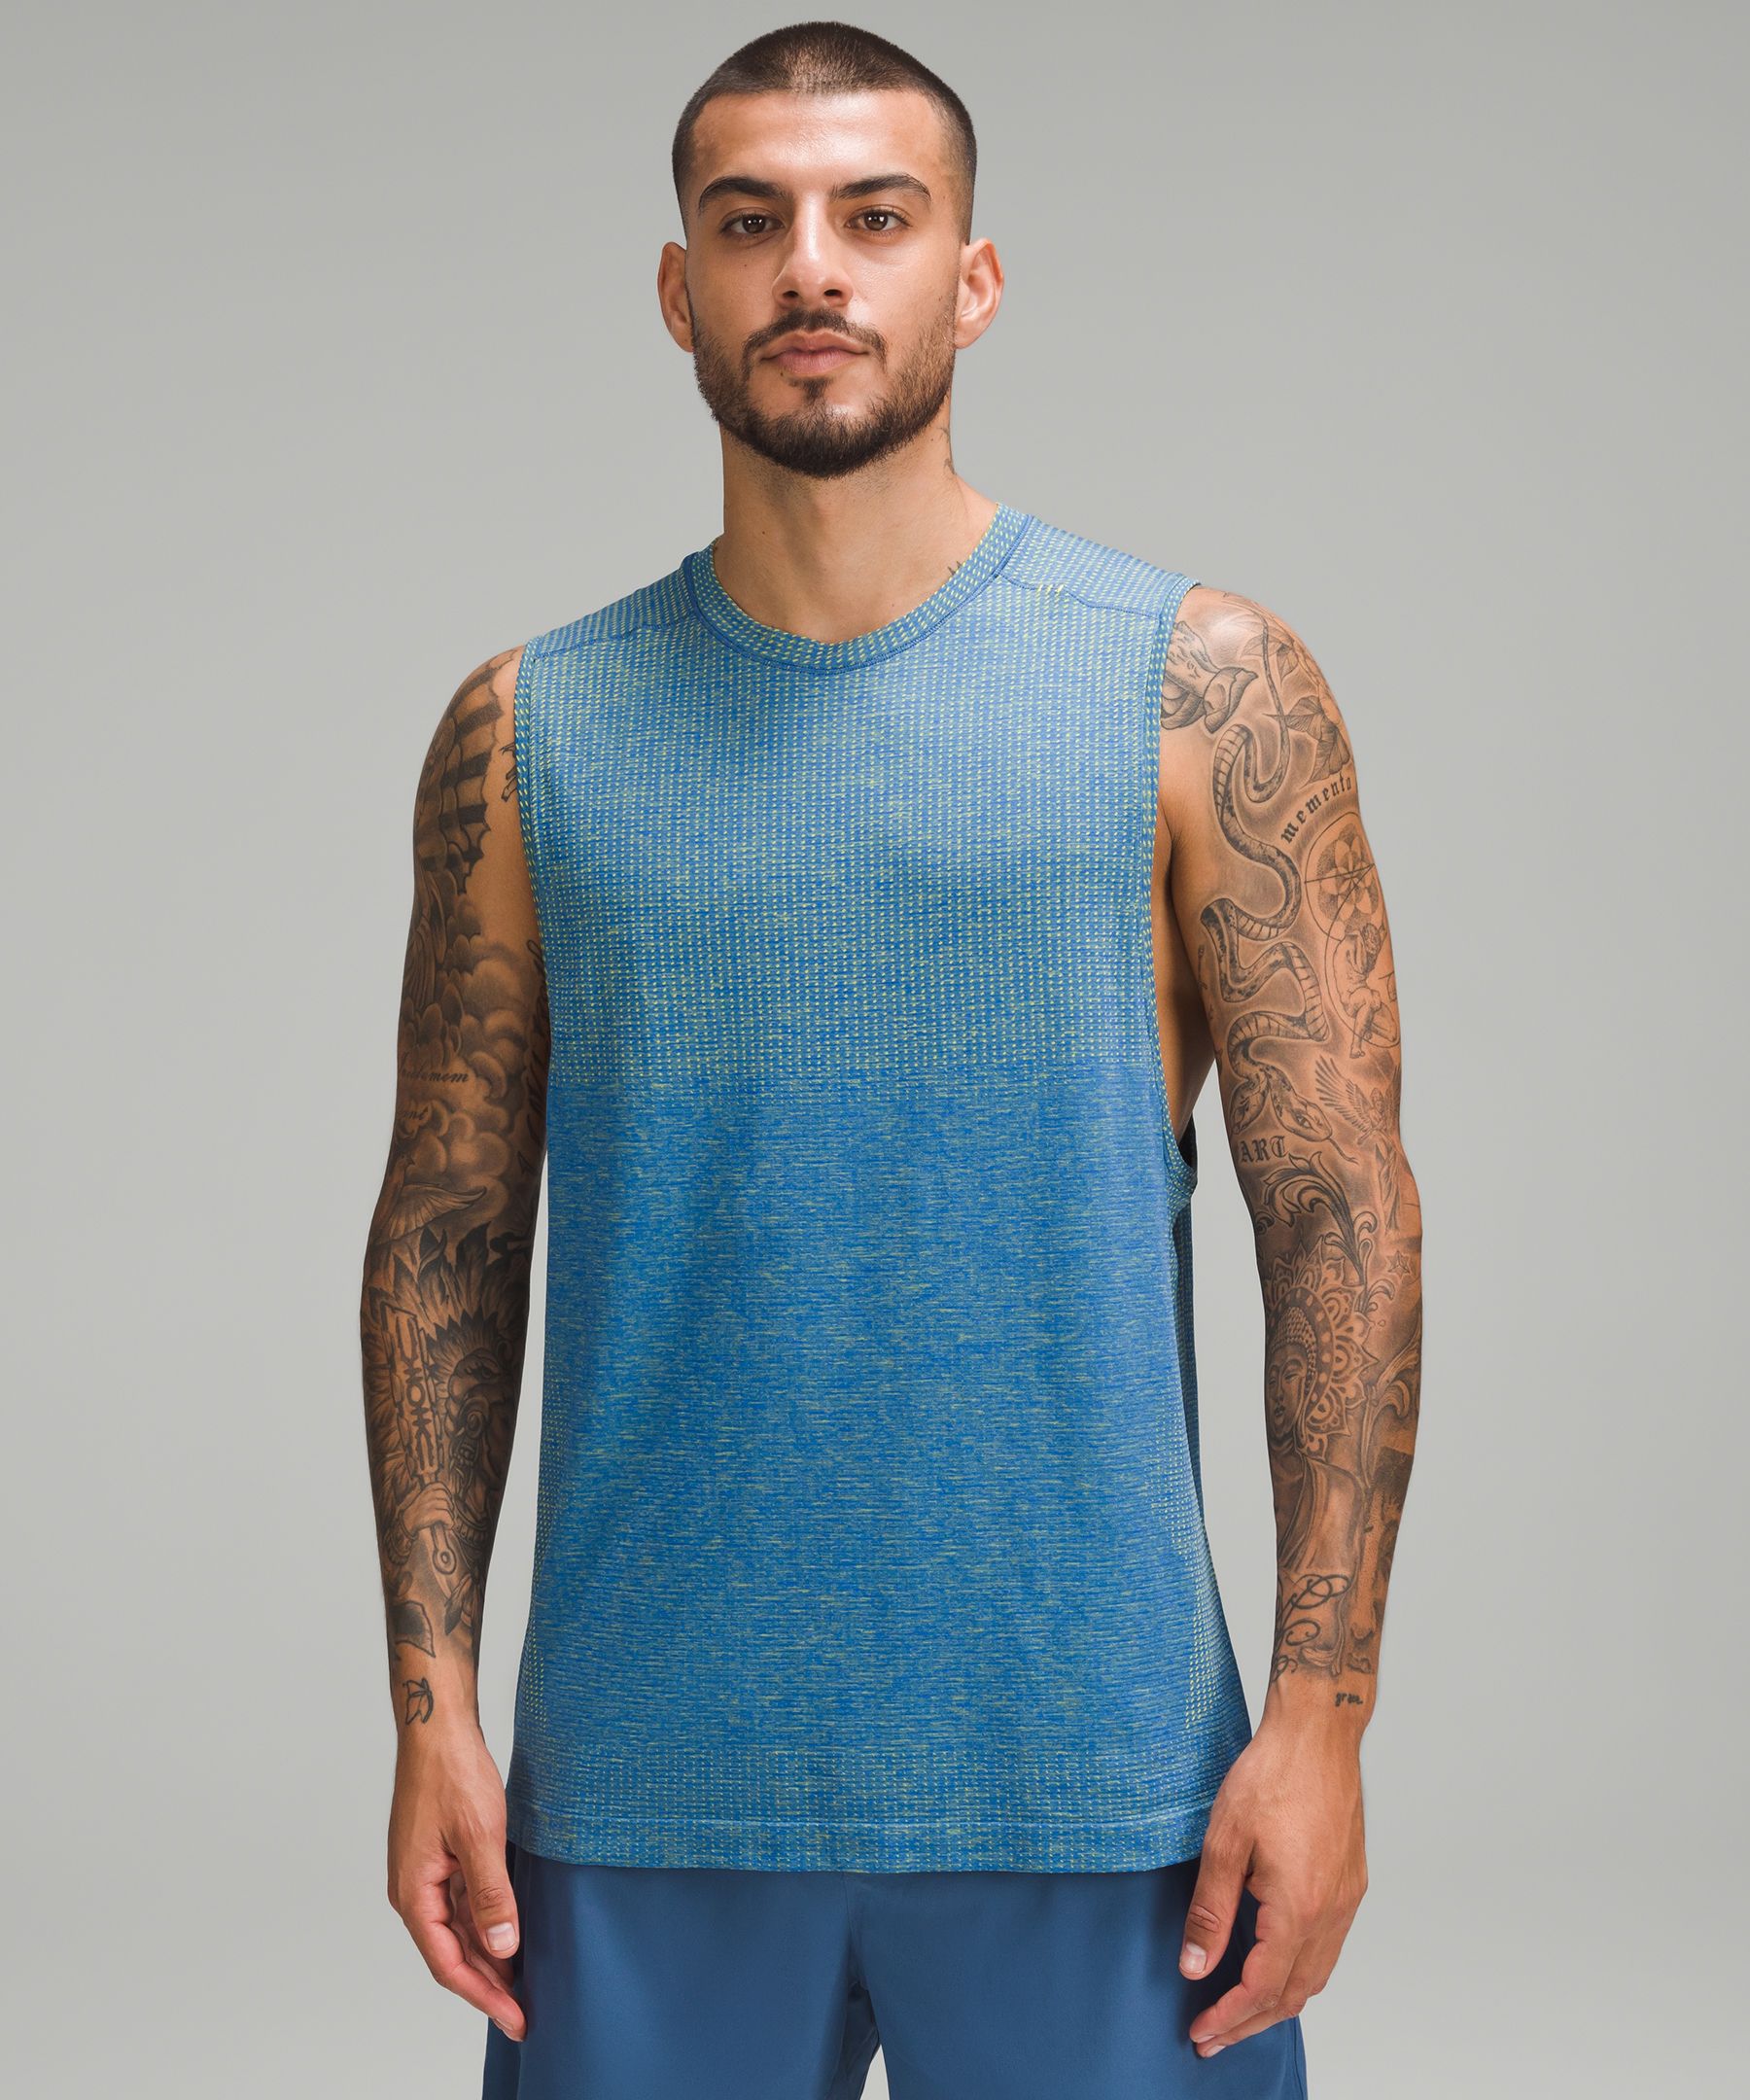 Men's Sleeveless Performance T-shirt - All In Motion™ Blue M : Target